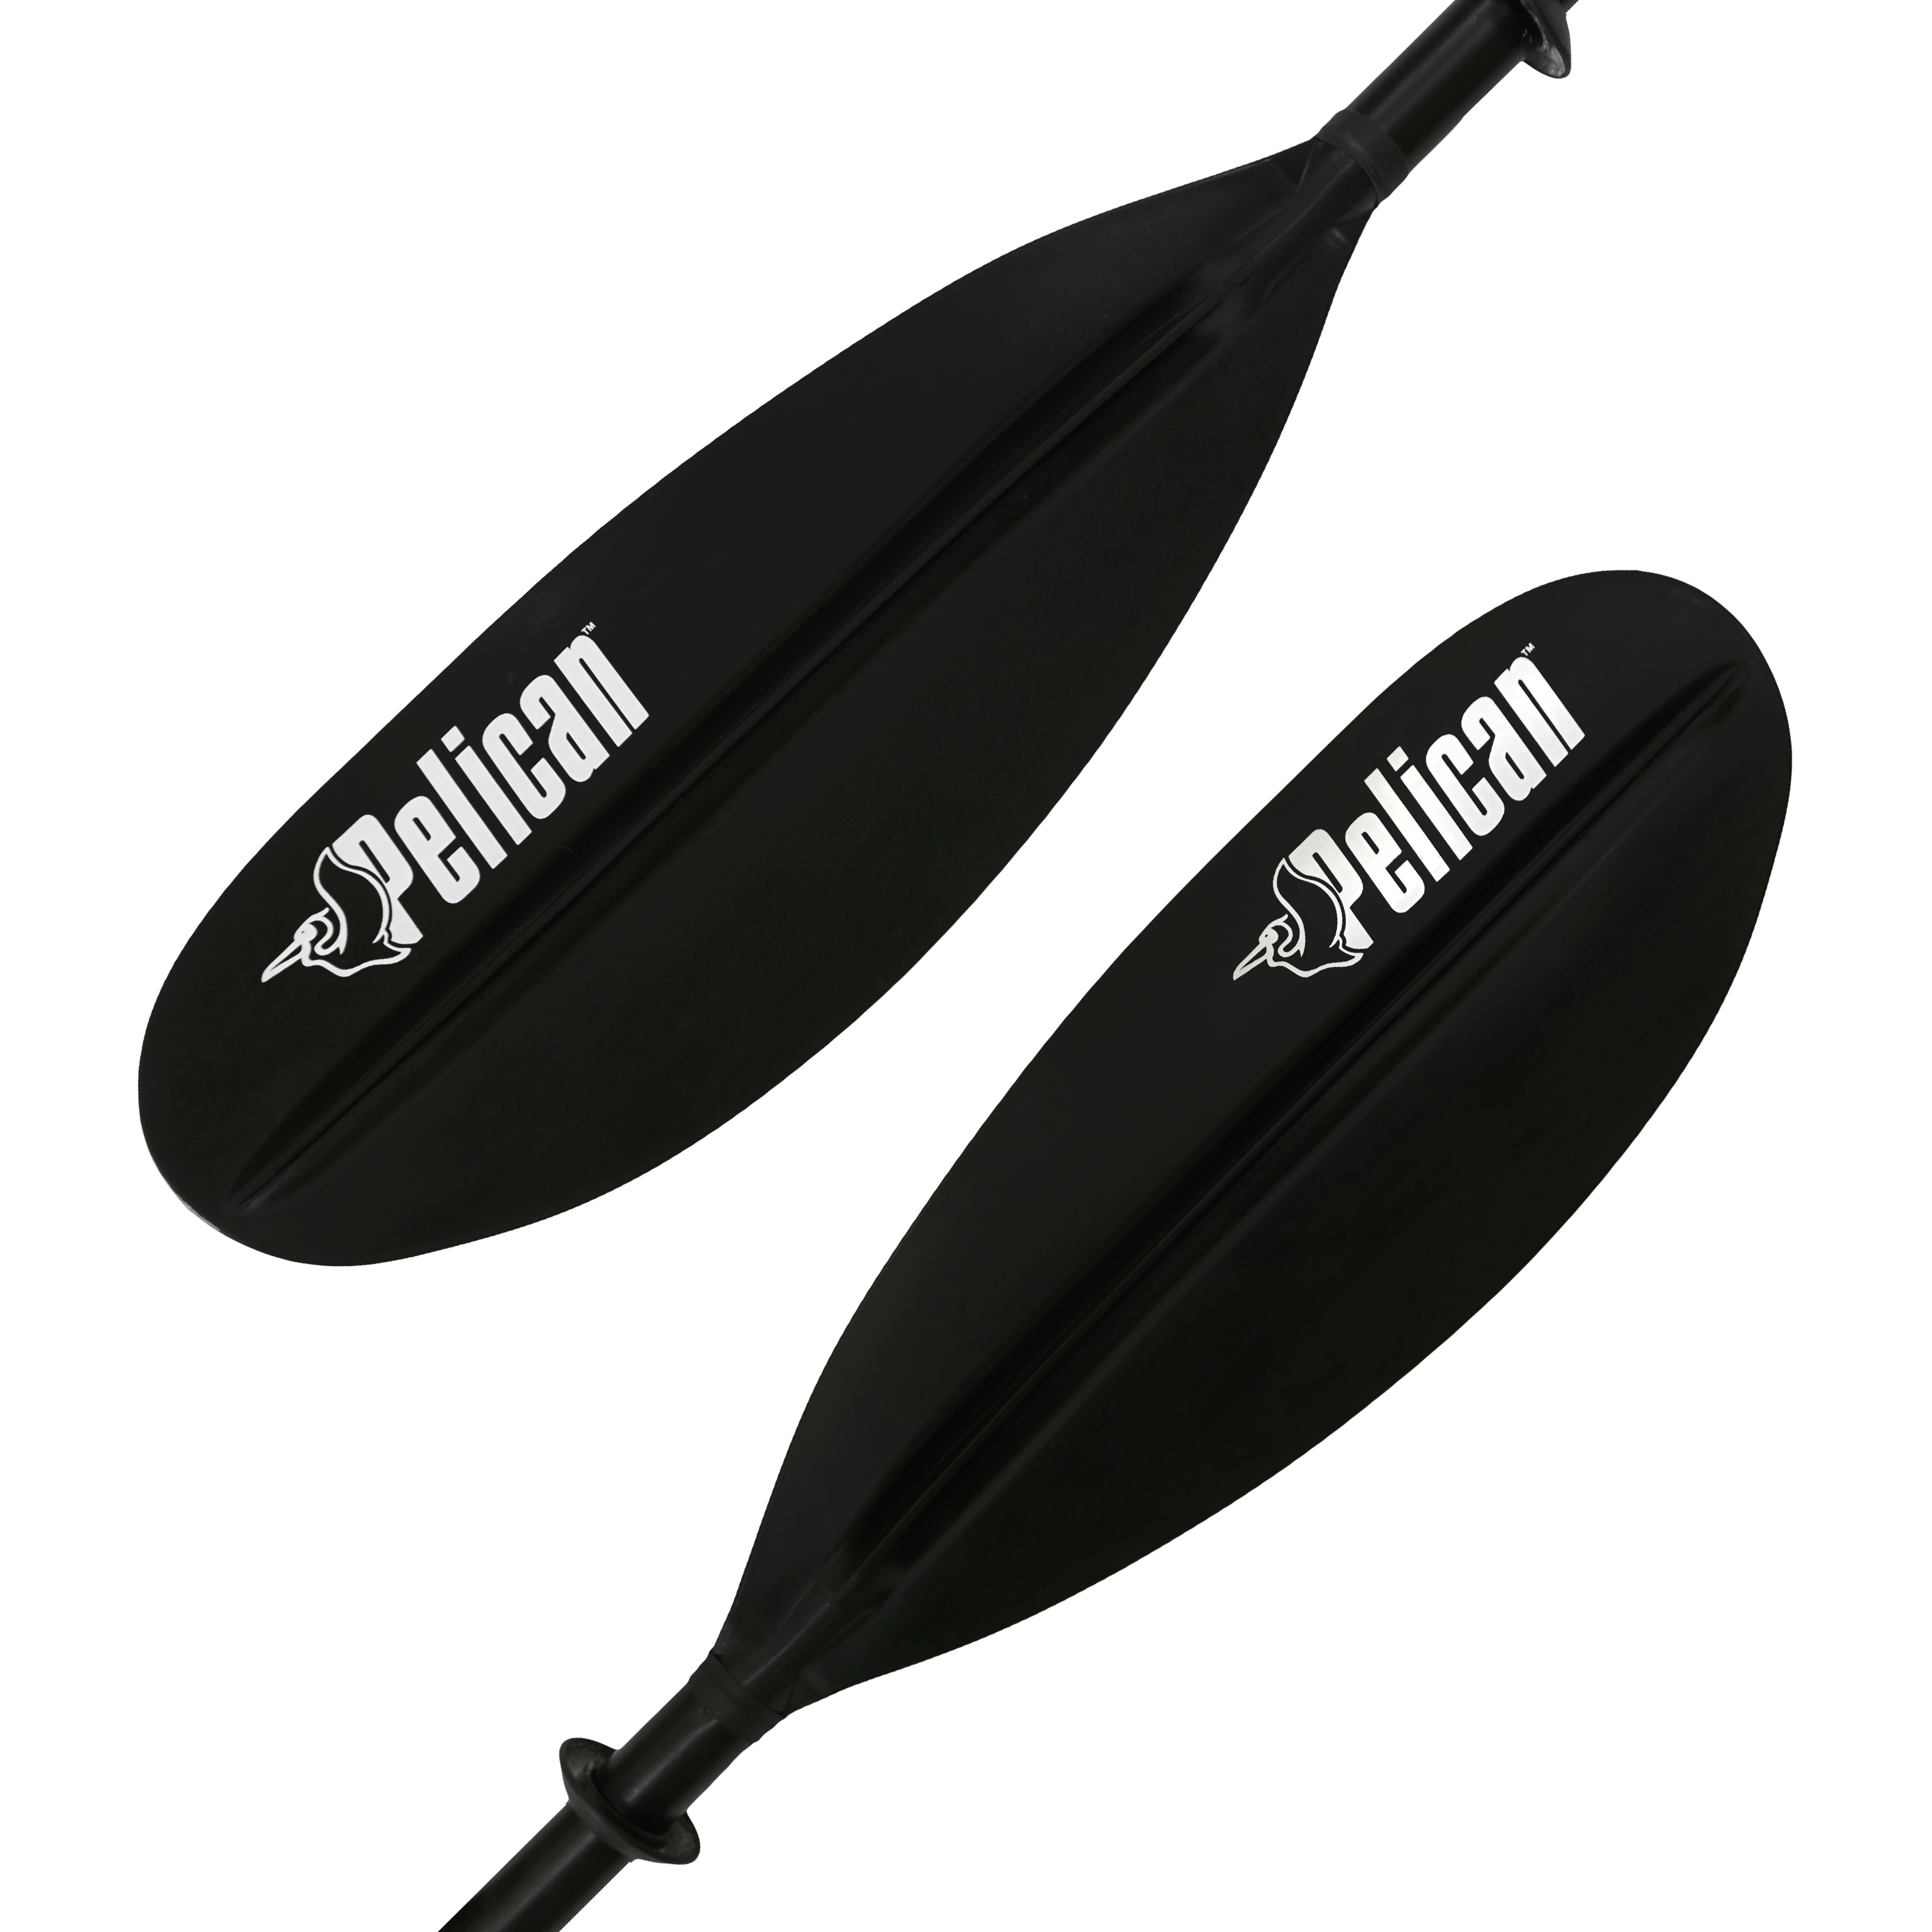 Pelican Aluminum Kayak Paddles 87-Inch / 220cm for Kayaking Boating Lime and Orange Black Tough & Lightweight 3 Colors 